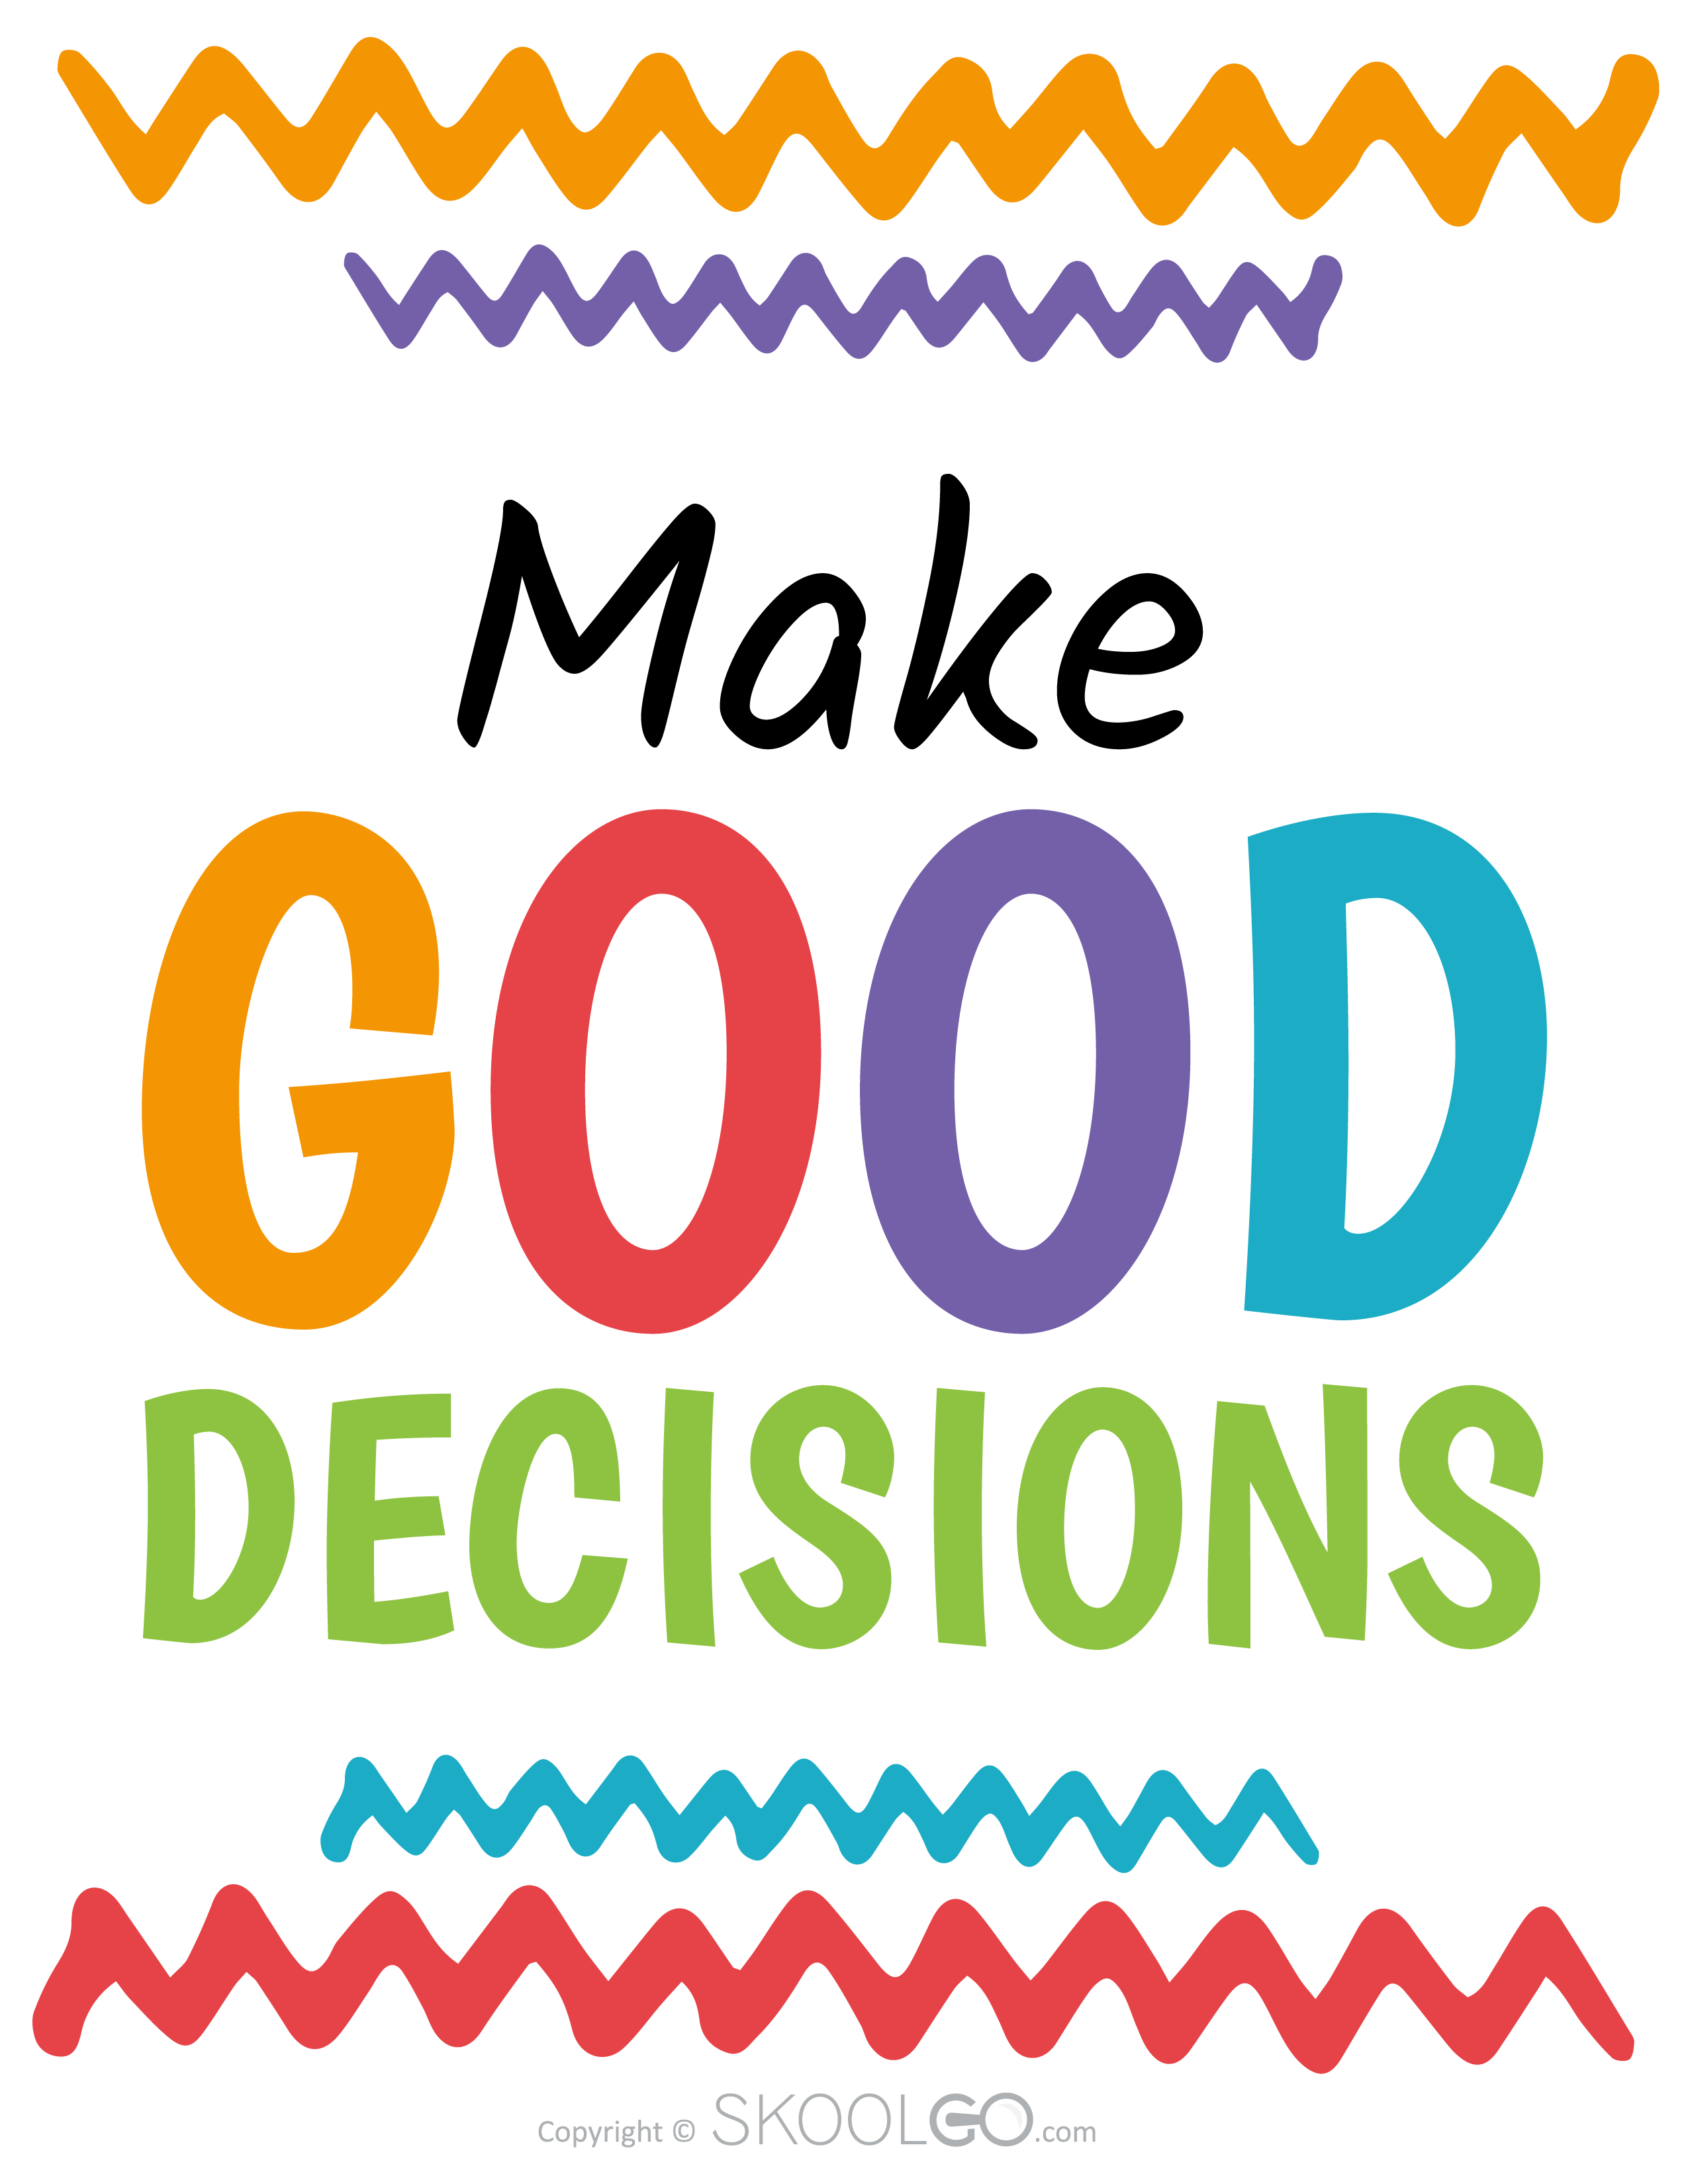 Make Good Decisions - Free Poster